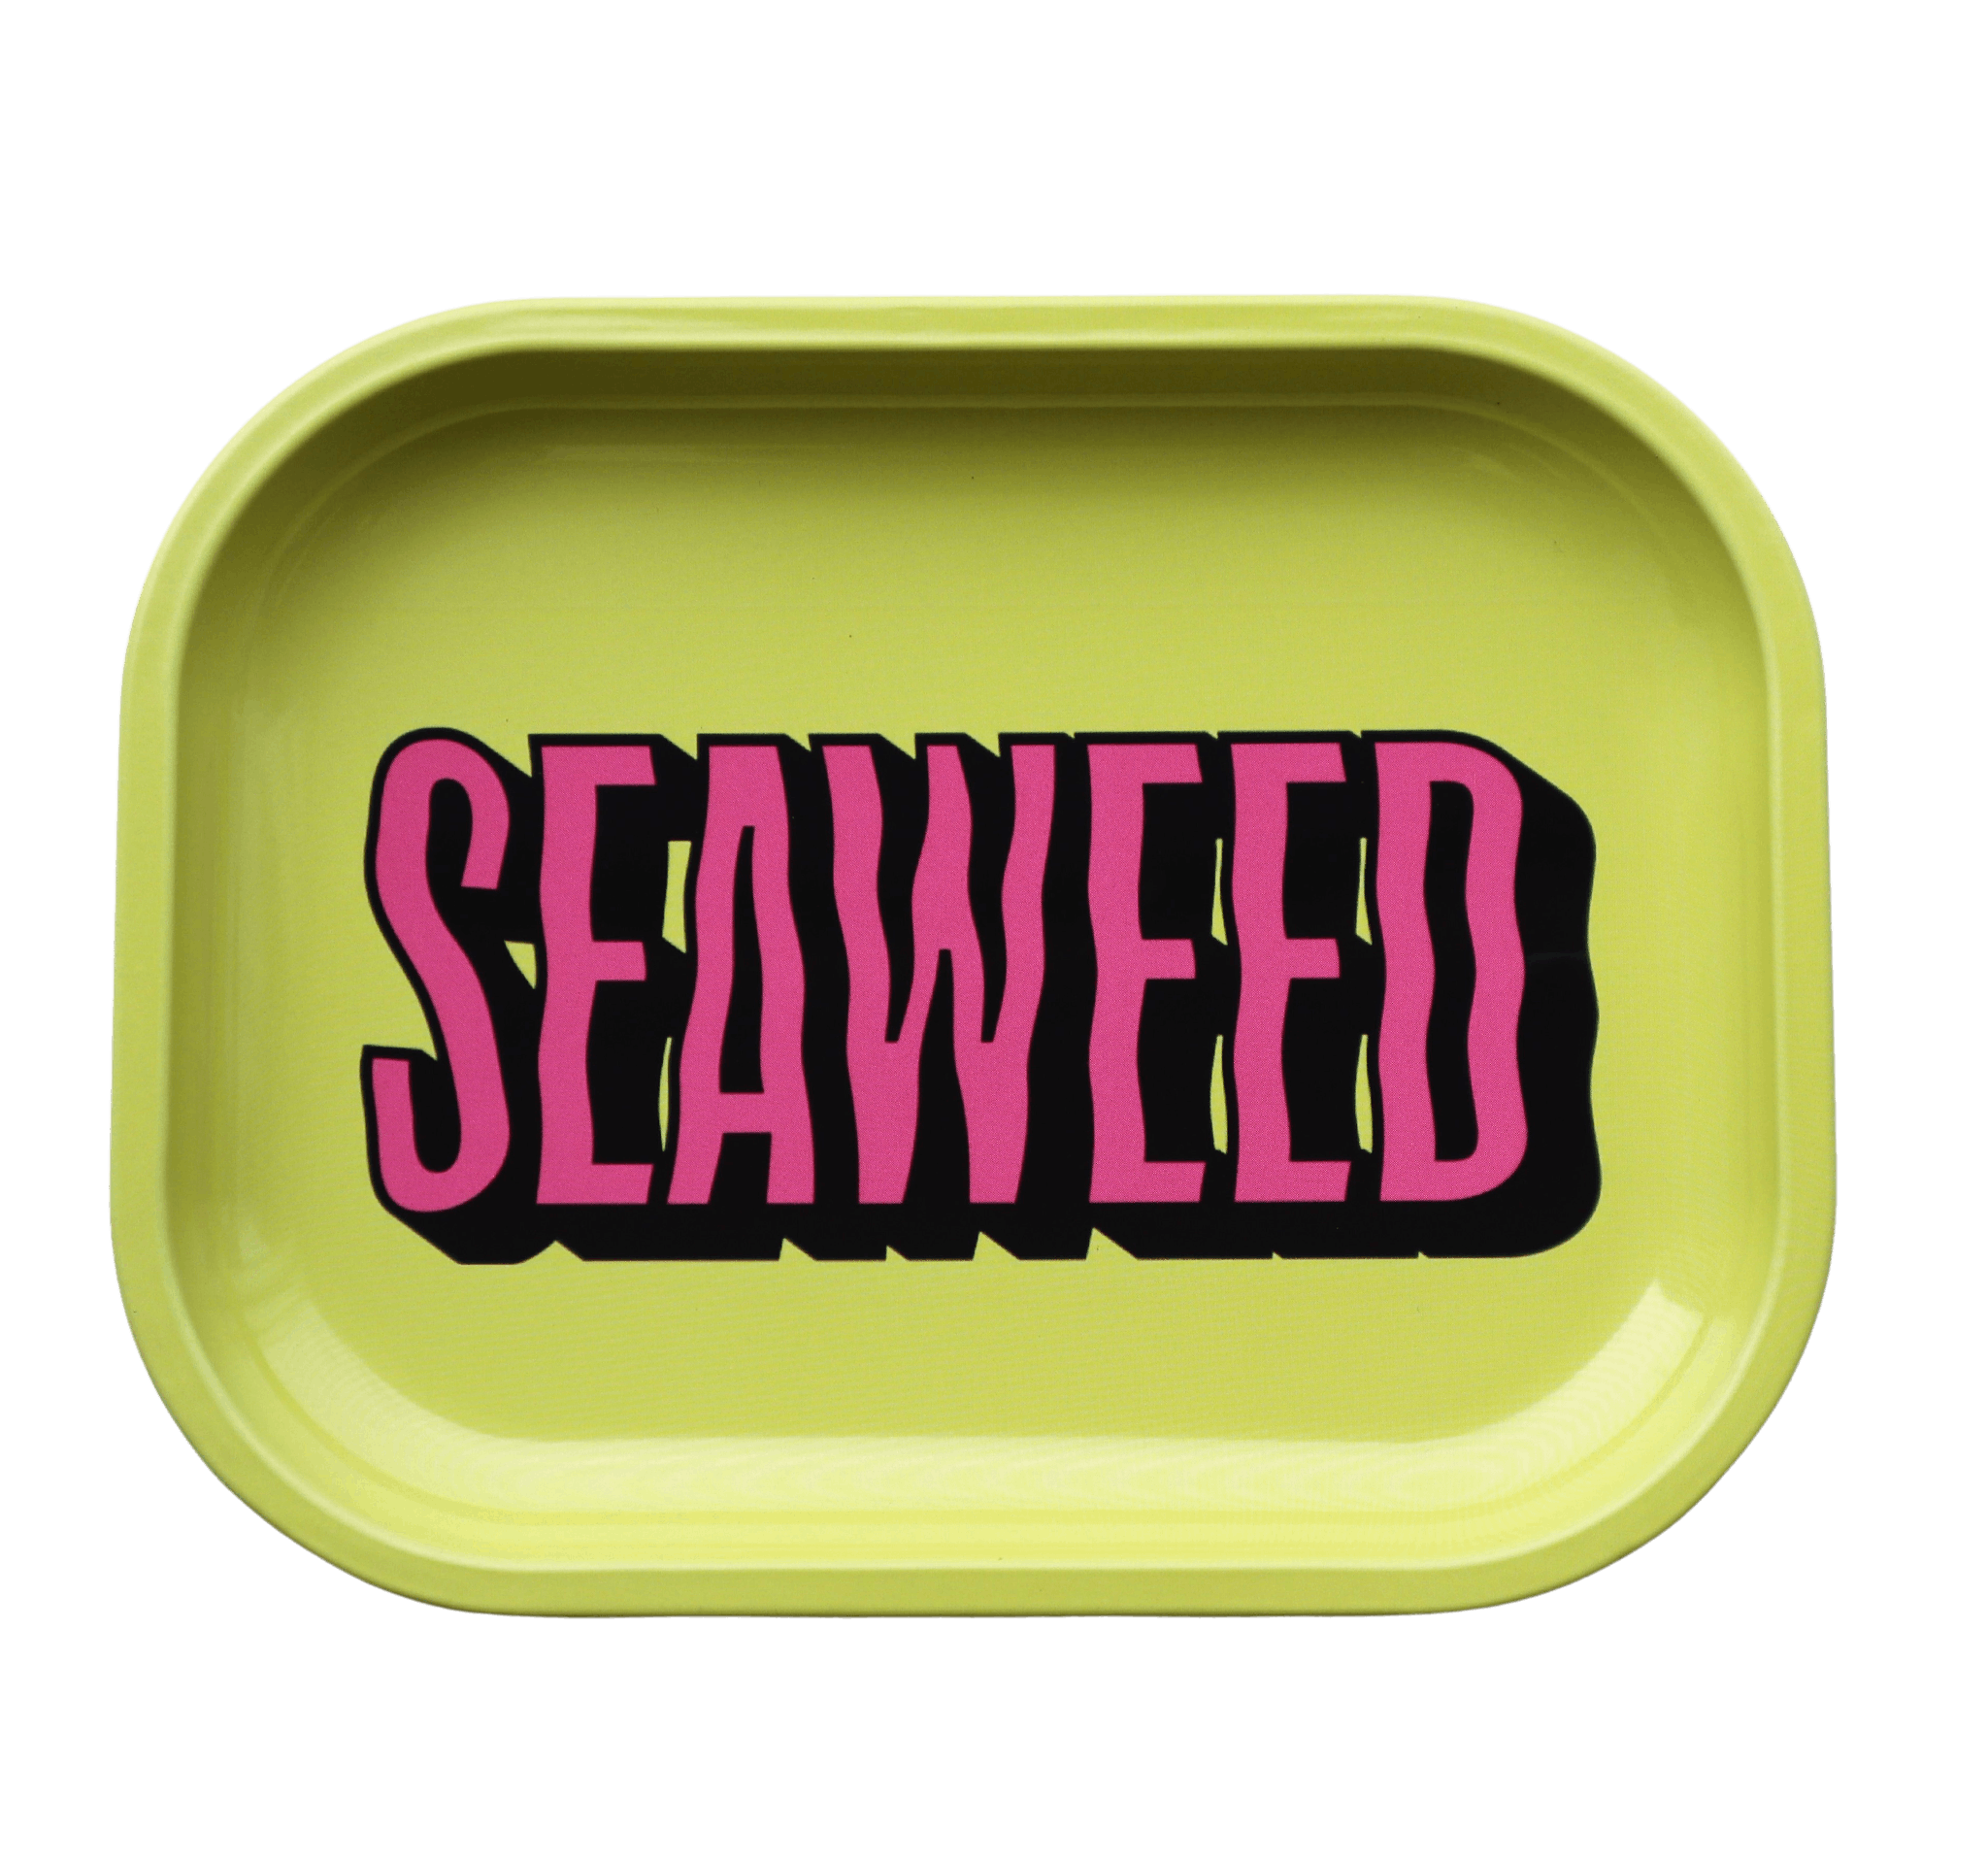 Seaweed Small Metal Rolling Tray